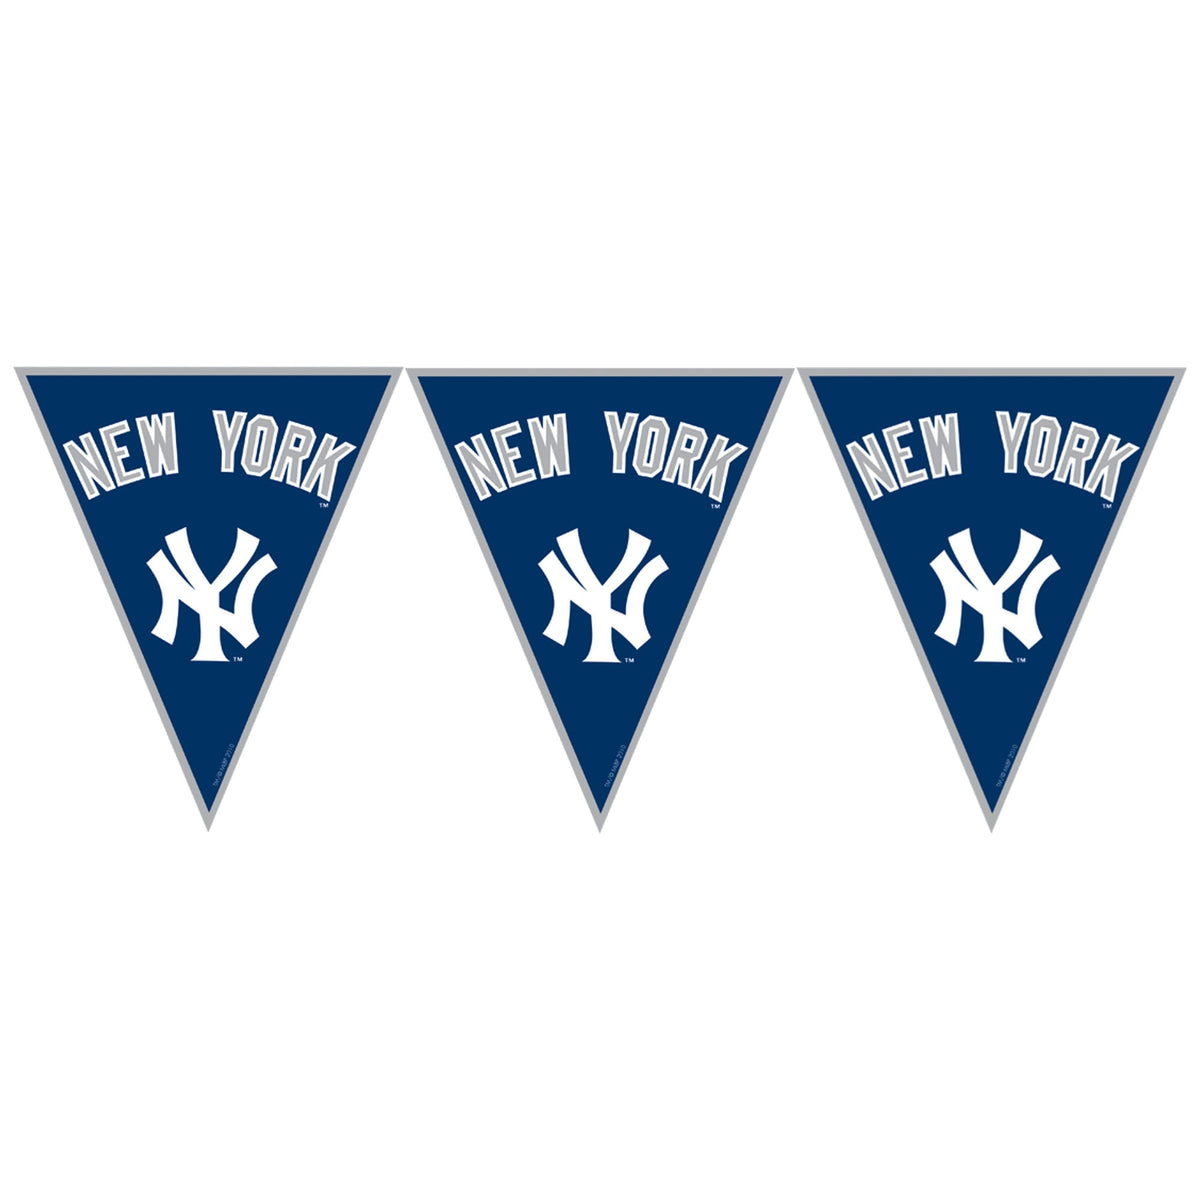 New York Yankees Major League Baseball Pennant Banner